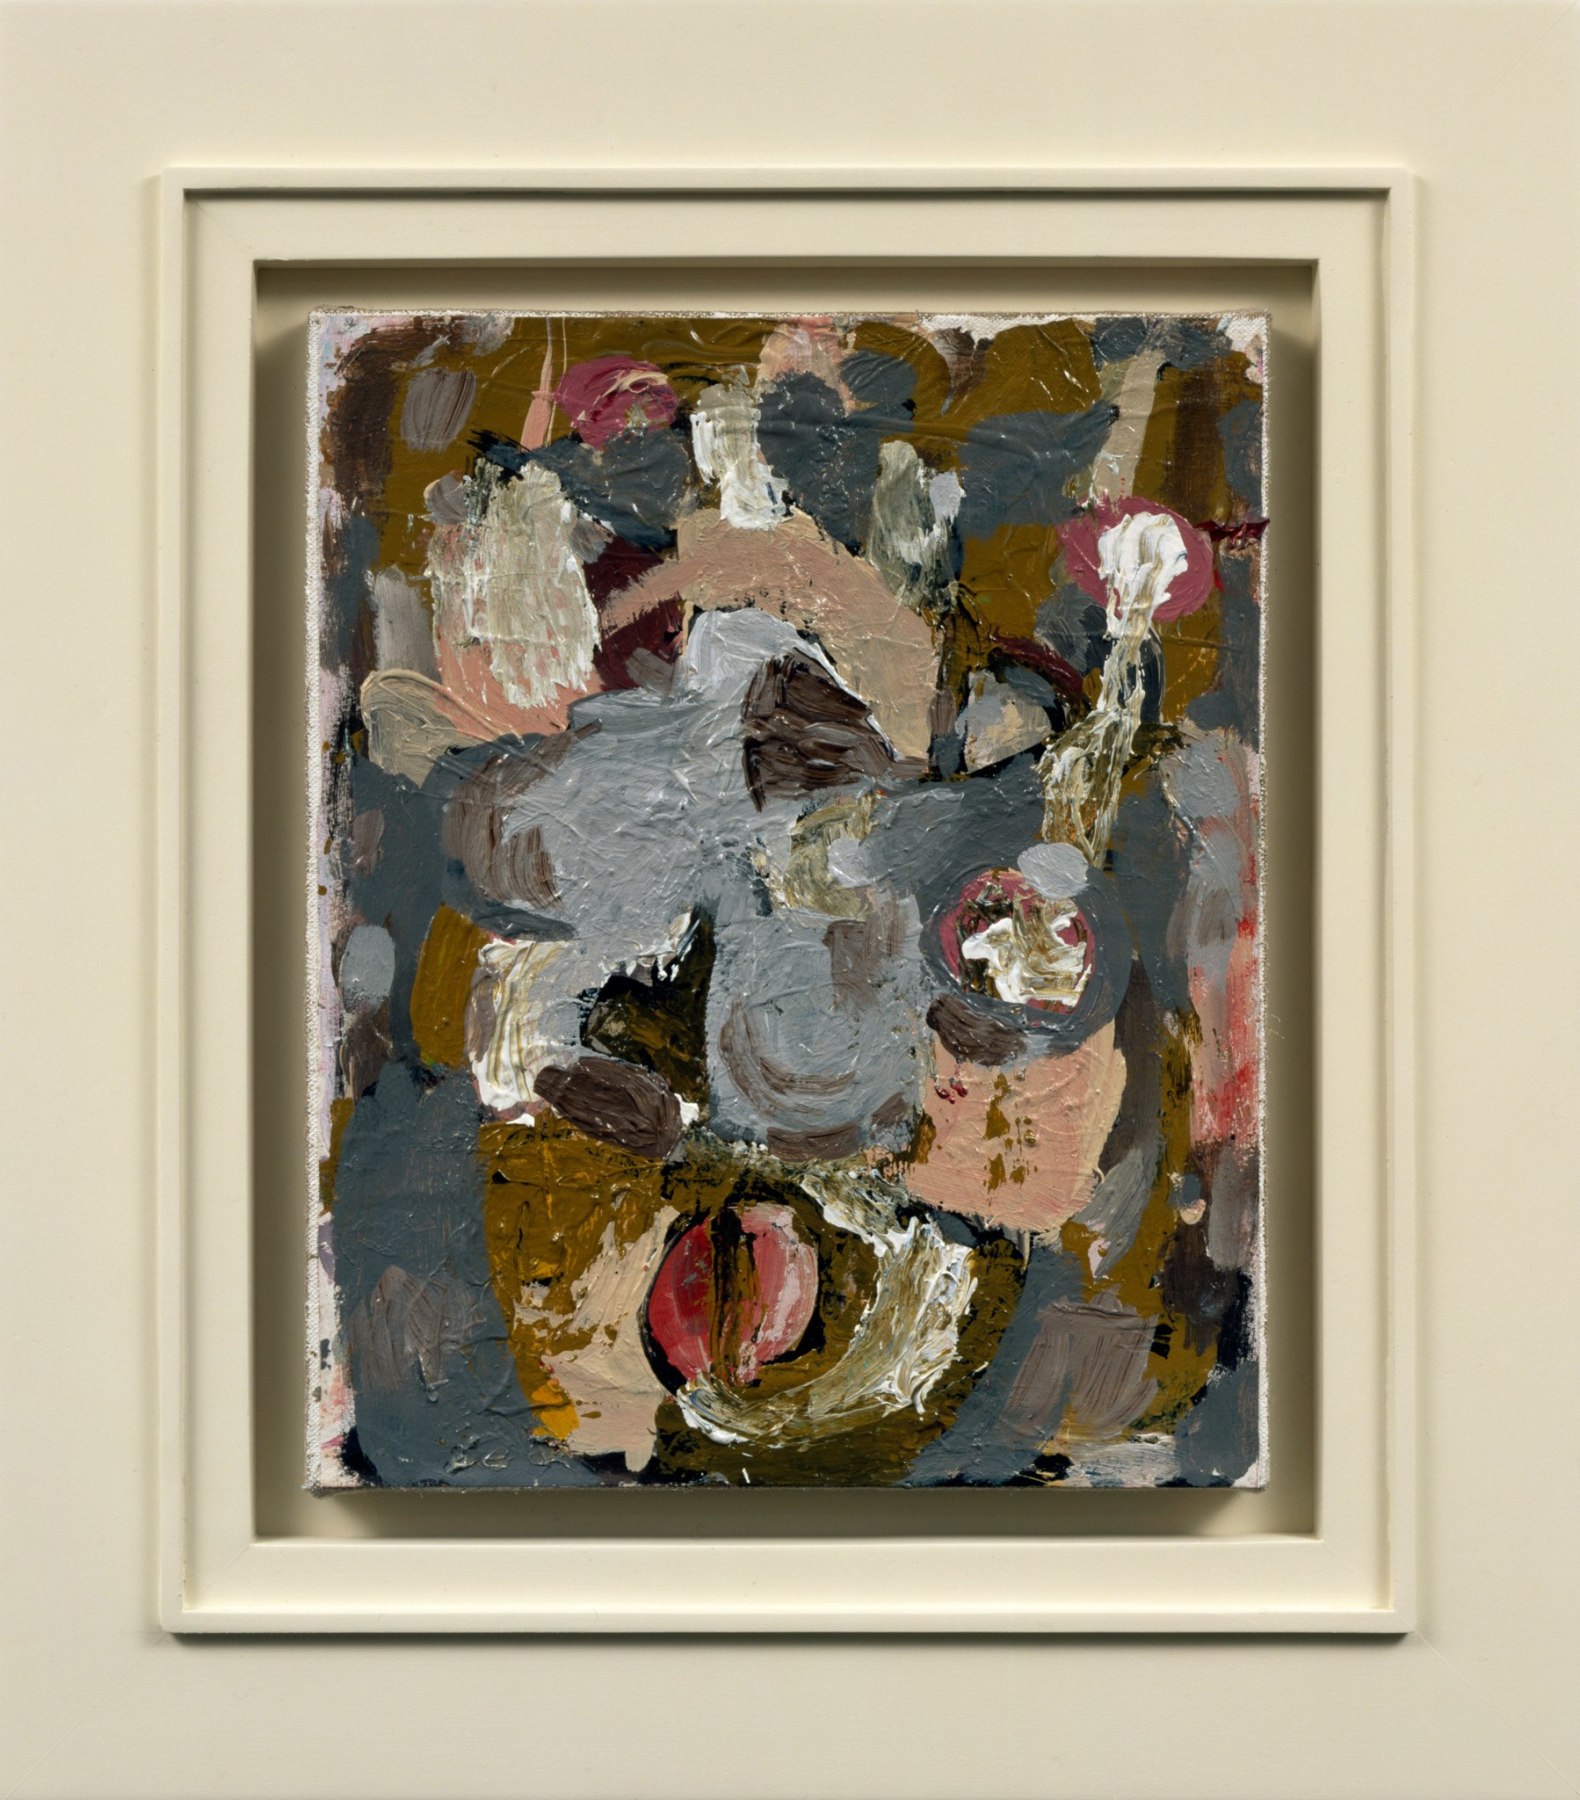 Rodney Graham, Small Modernist Painting 33, 2005